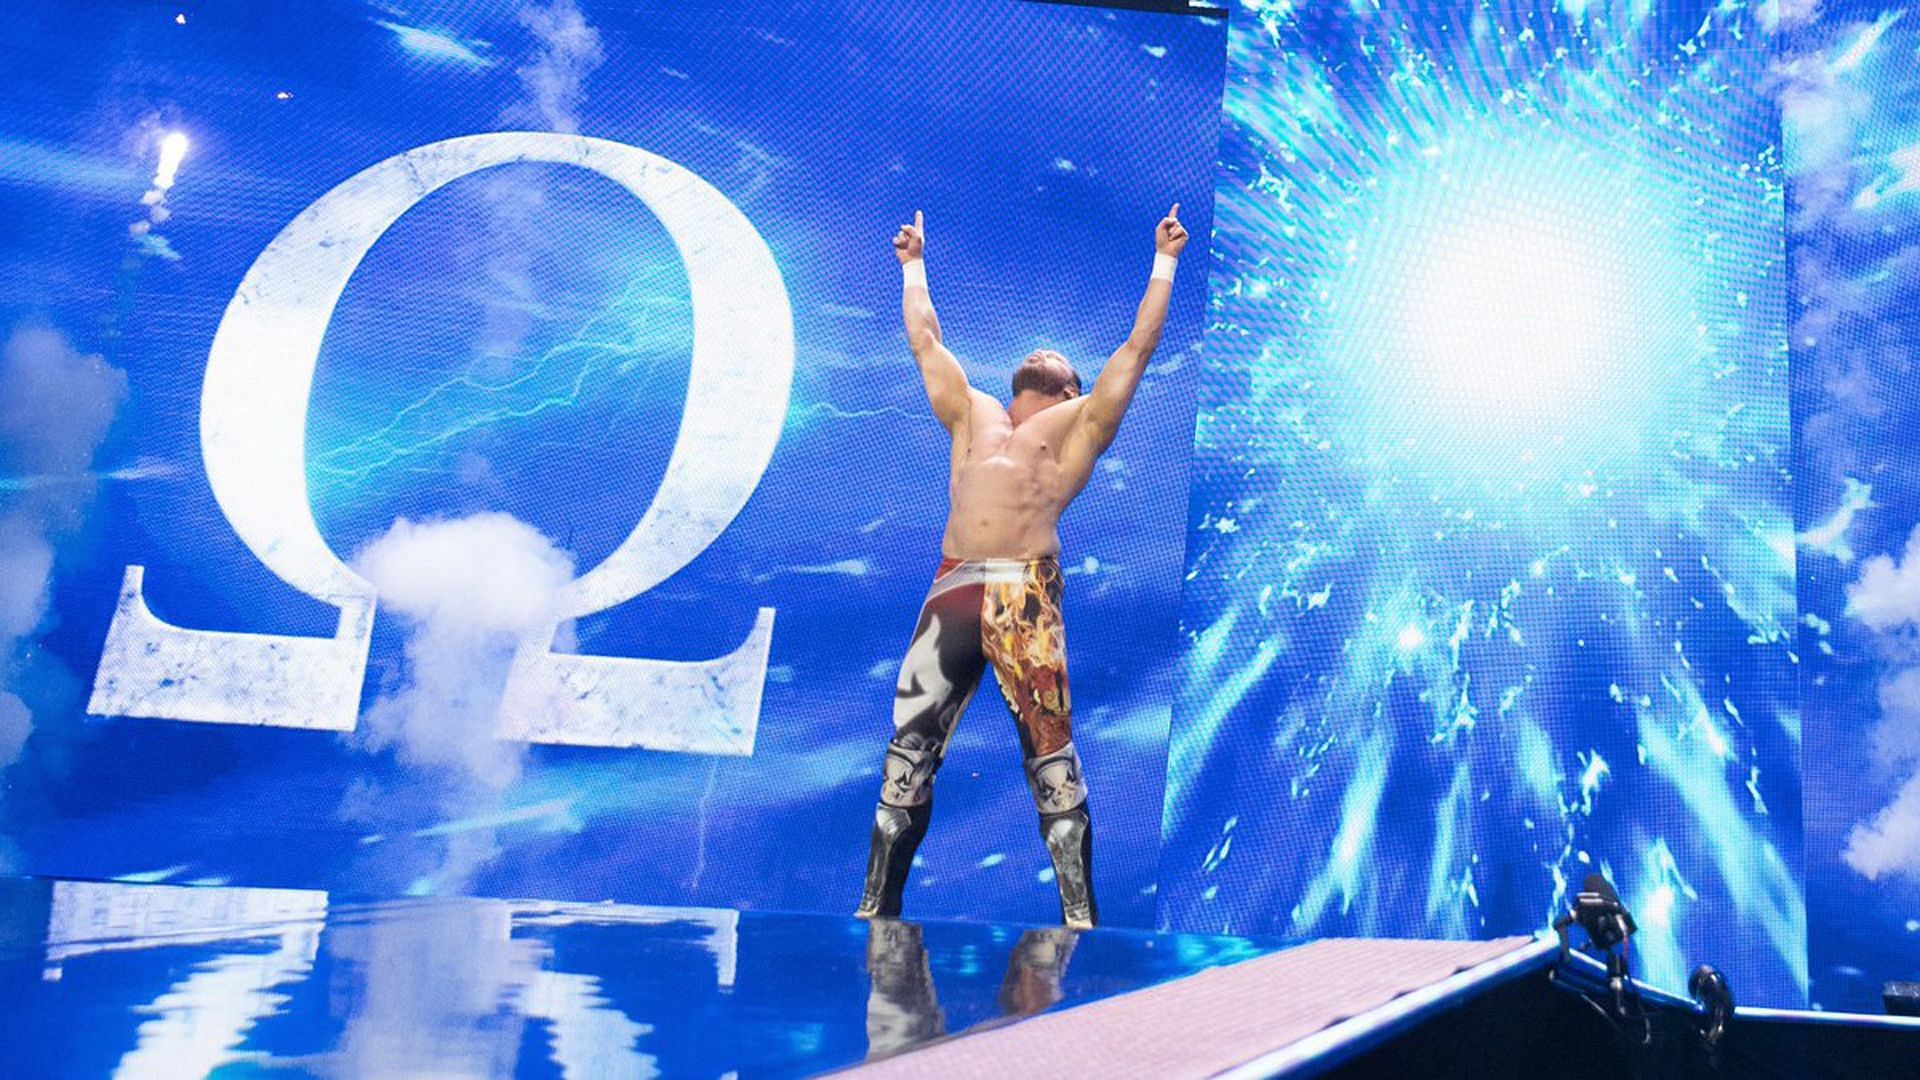 Kenny Omega will make his AEW return tonight (image credit: All Elite Wrestling/X)